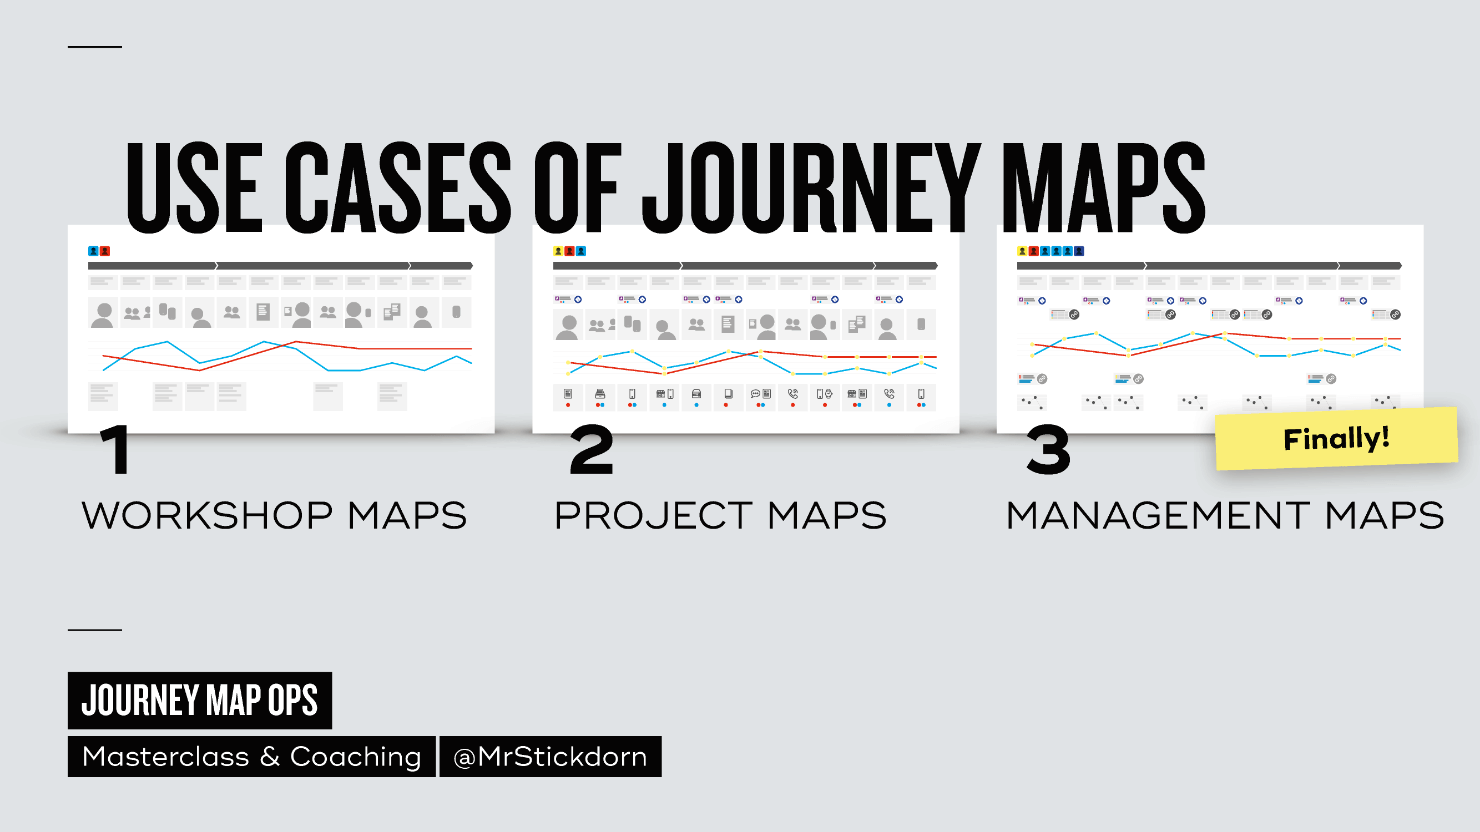 Marc Stickdorn氏の資料。「USE CASES OF JOURNEY MAPS」と題し、「1 WORKSHOP MAPS」「2 PROJECT MAPS」「3 MANAGEMENT MAPS」の3種類のカスタマージャーニーマップがあることを紹介している。